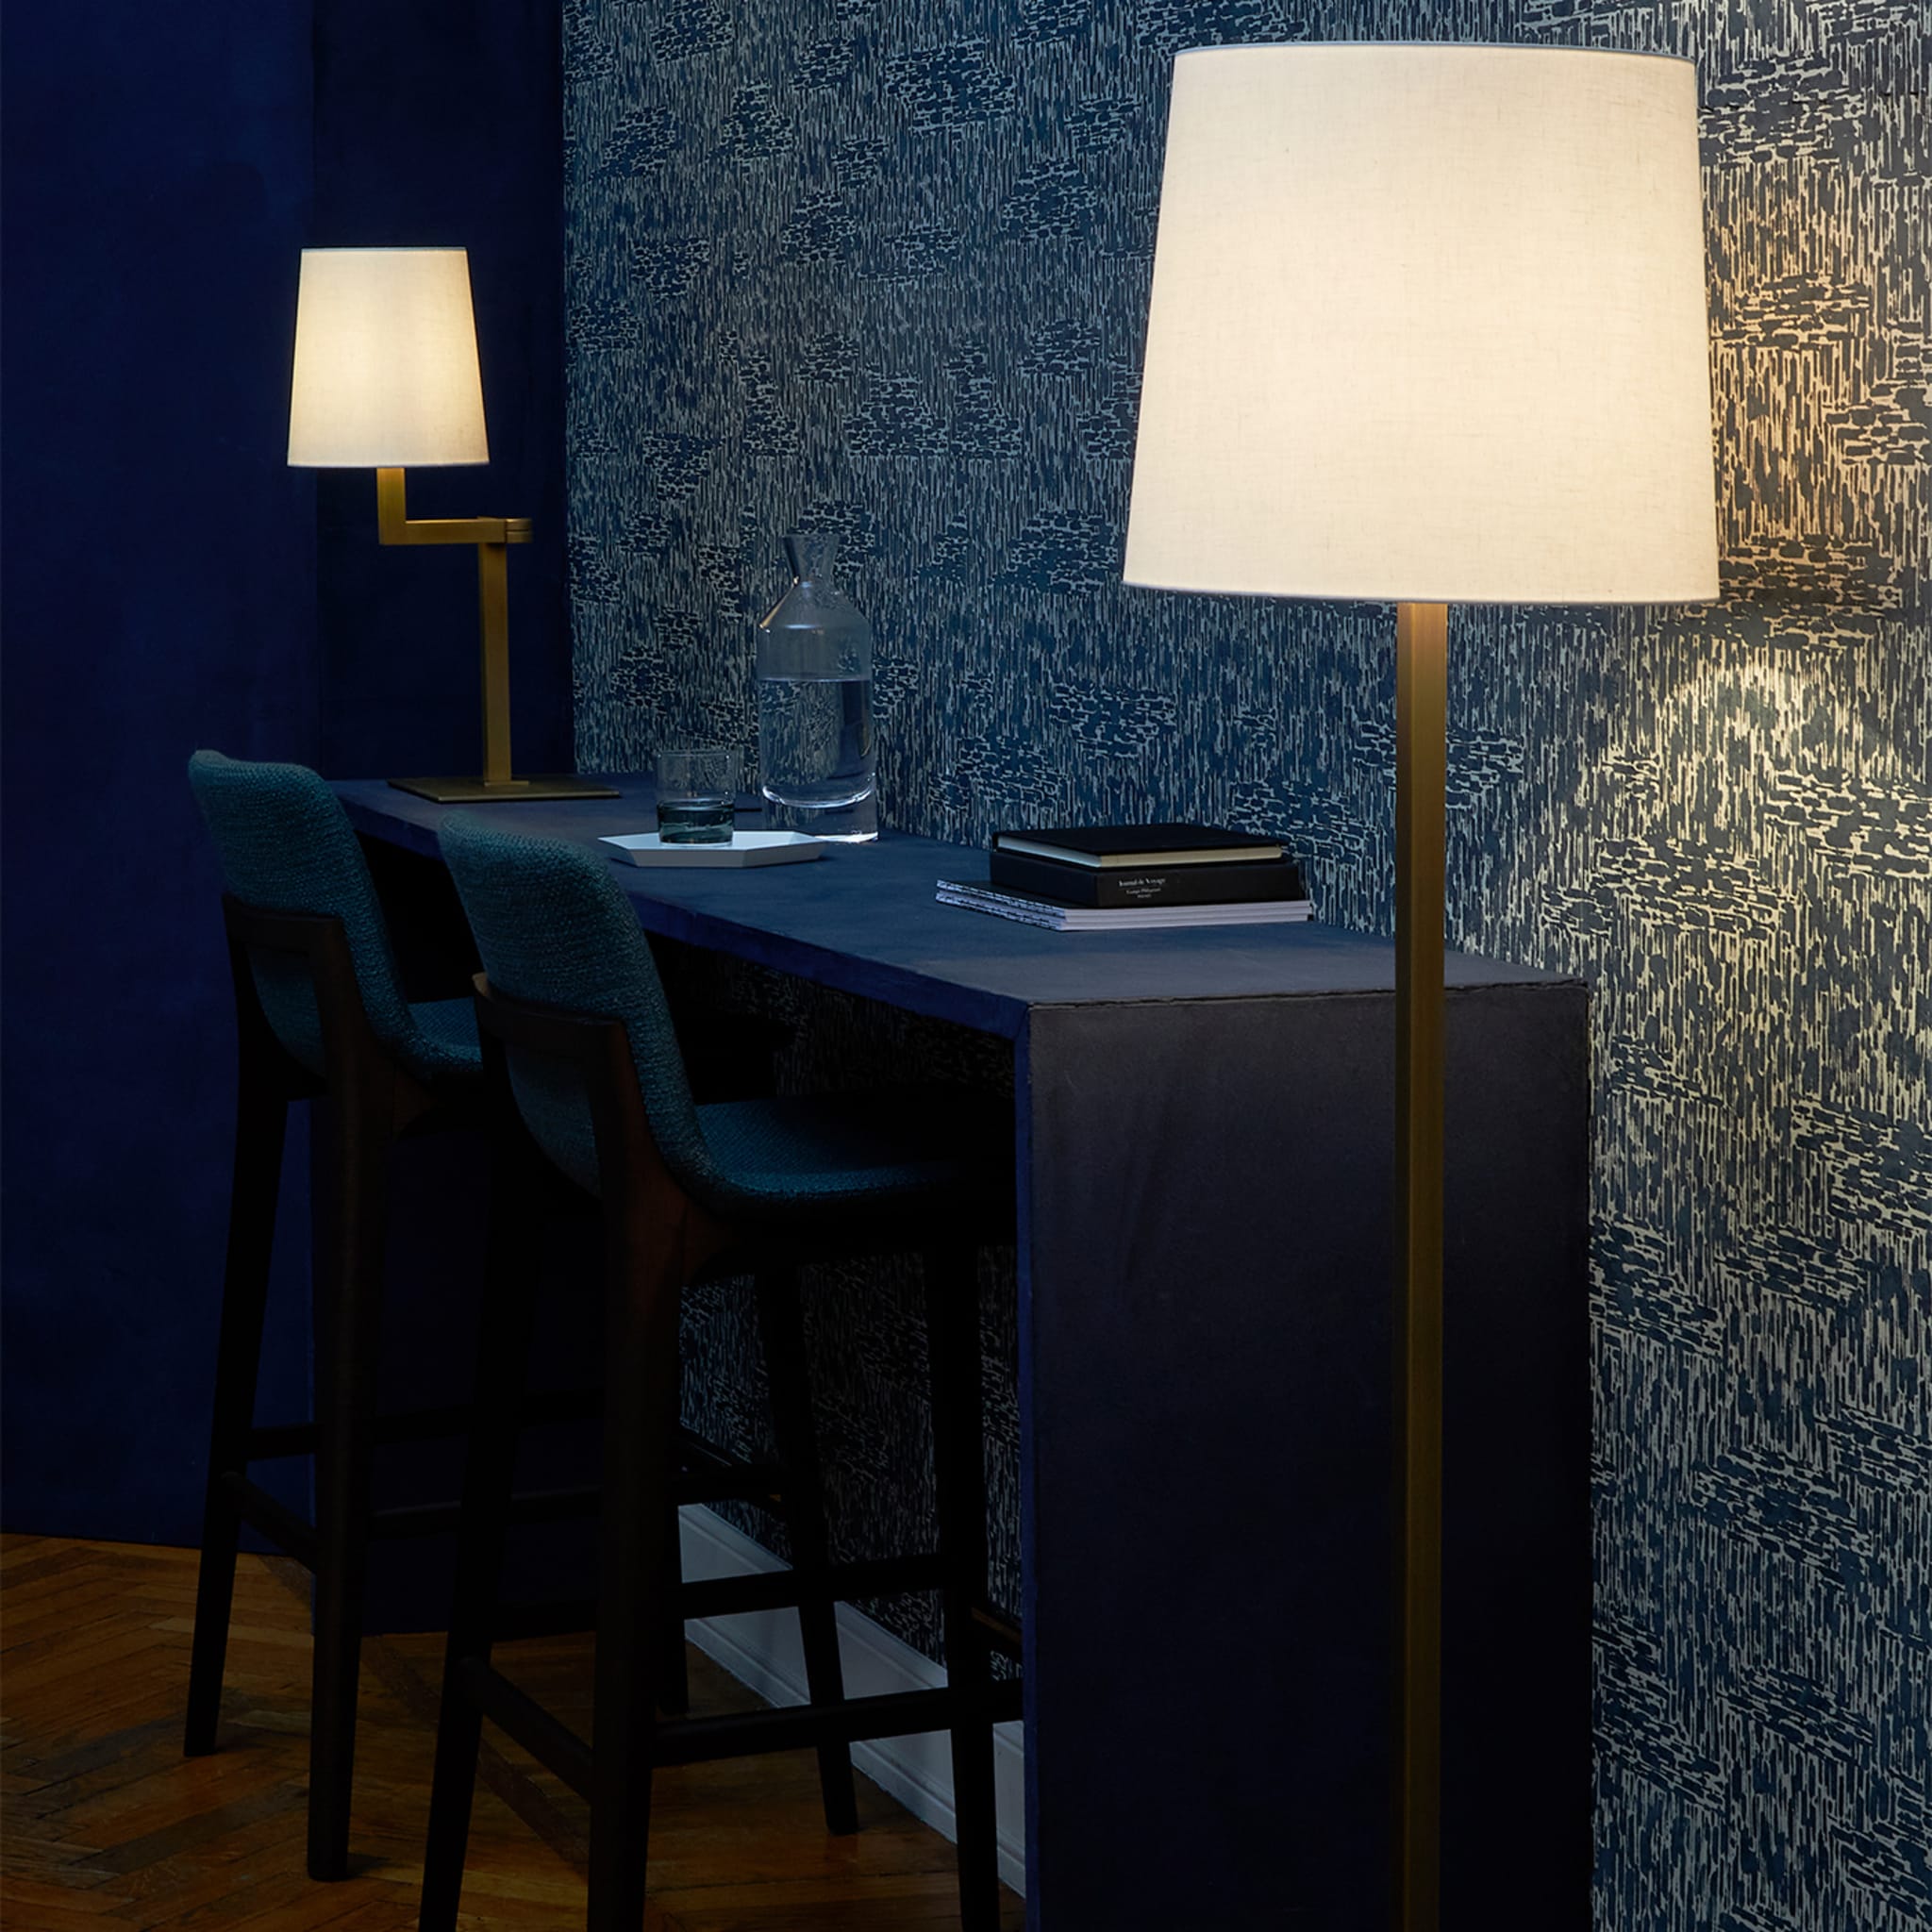 Tonda Bronzed Floor Lamp with White Cotton Shade - Alternative view 1